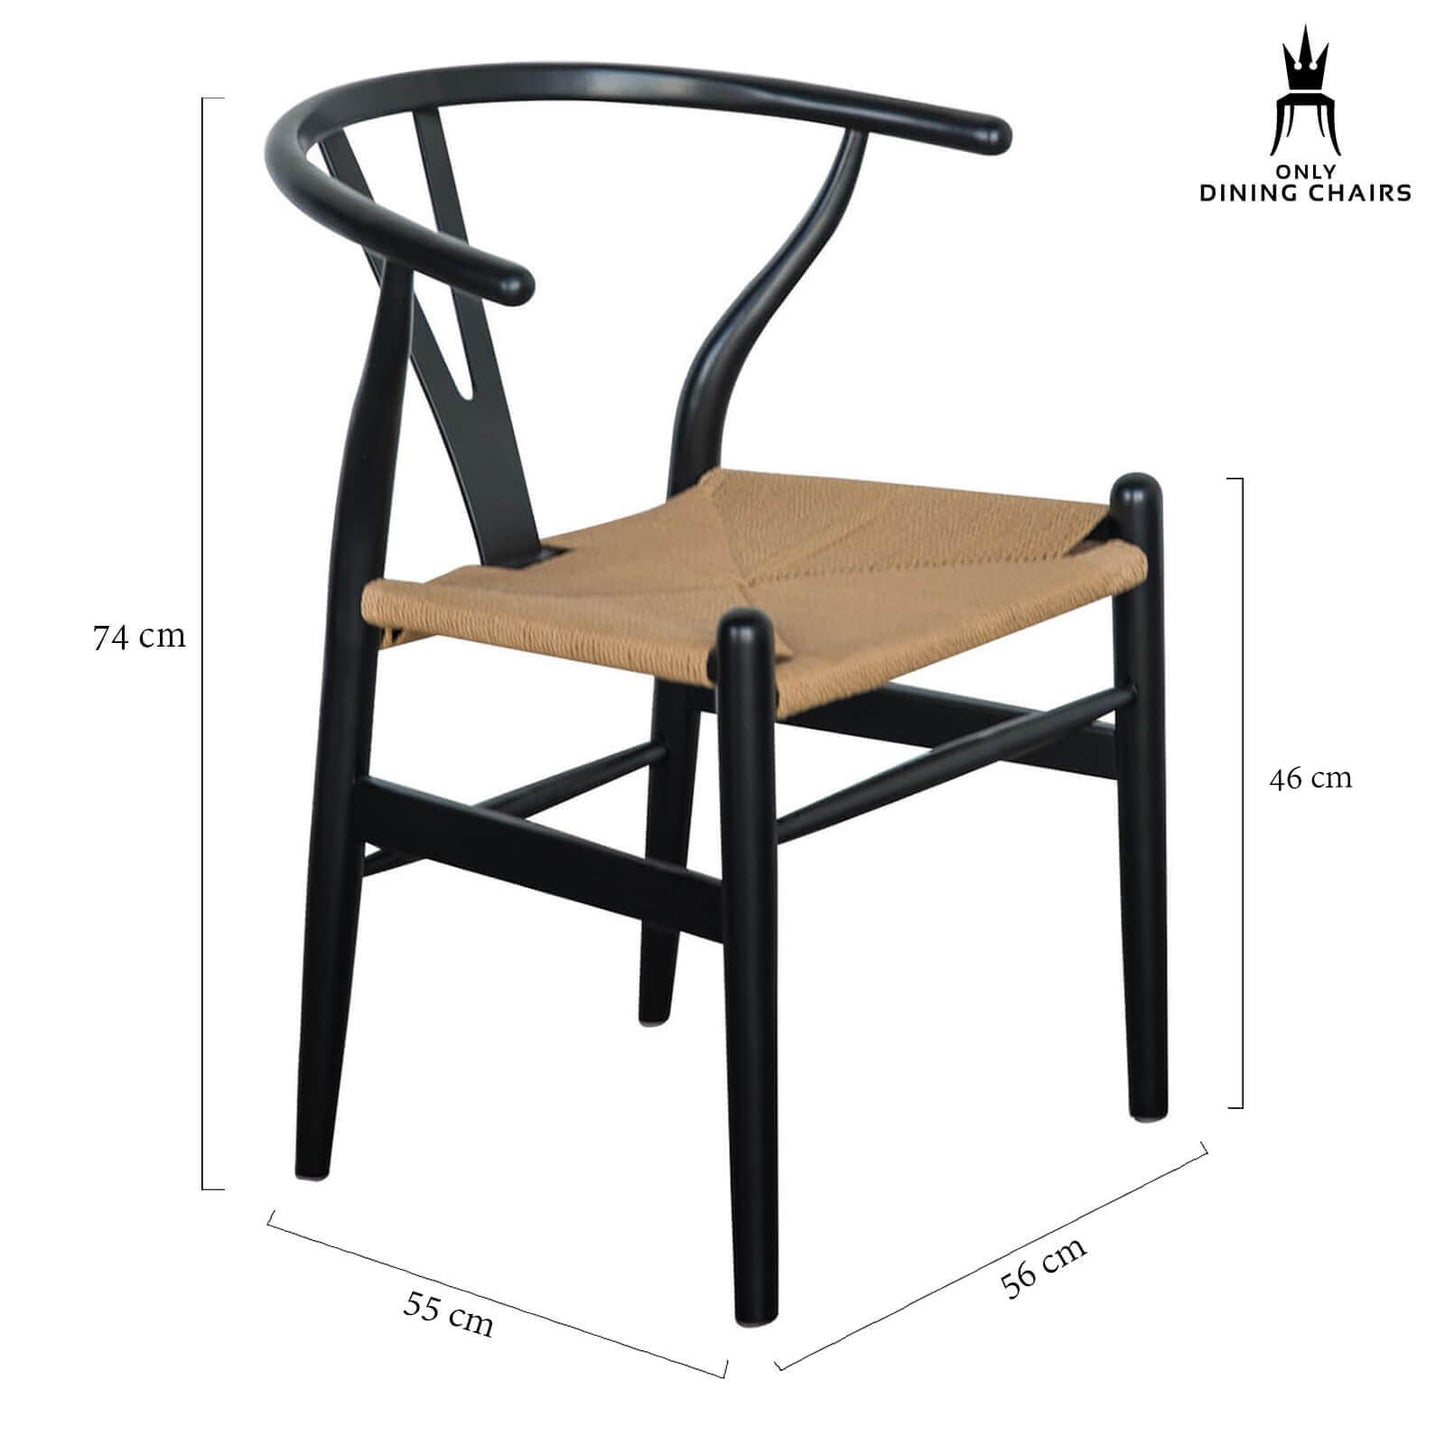 Aldgate | Scandinavian Coastal Wooden Dining Chair | Natural